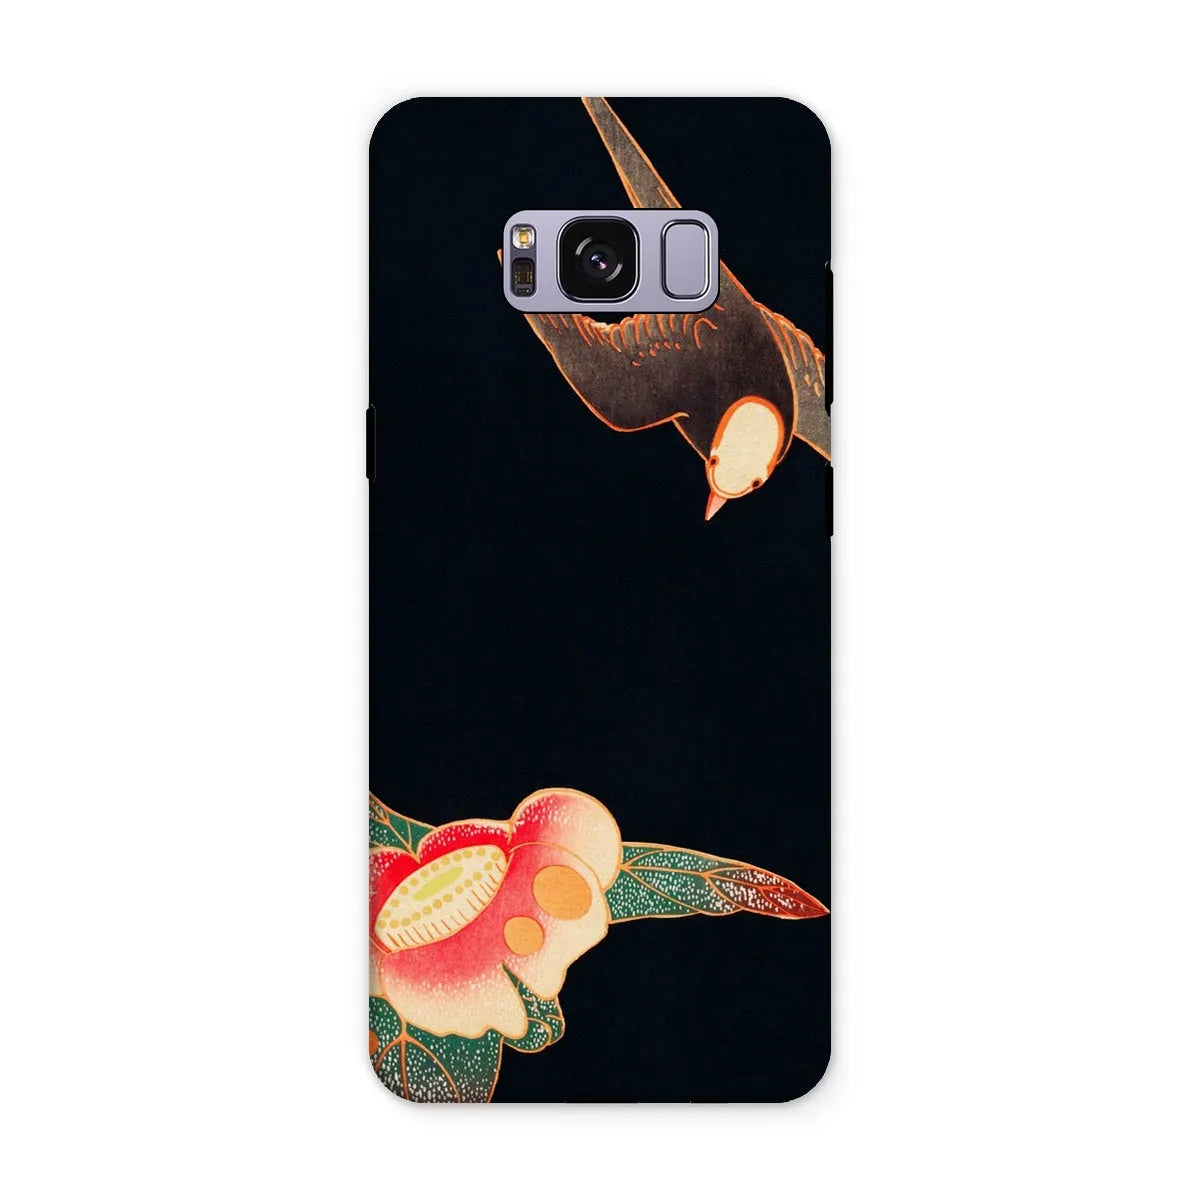 Swallow & Camellia - Meiji Era Art Phone Case - Ito Jakuchu - Samsung Galaxy S8 Plus / Matte - Mobile Phone Cases